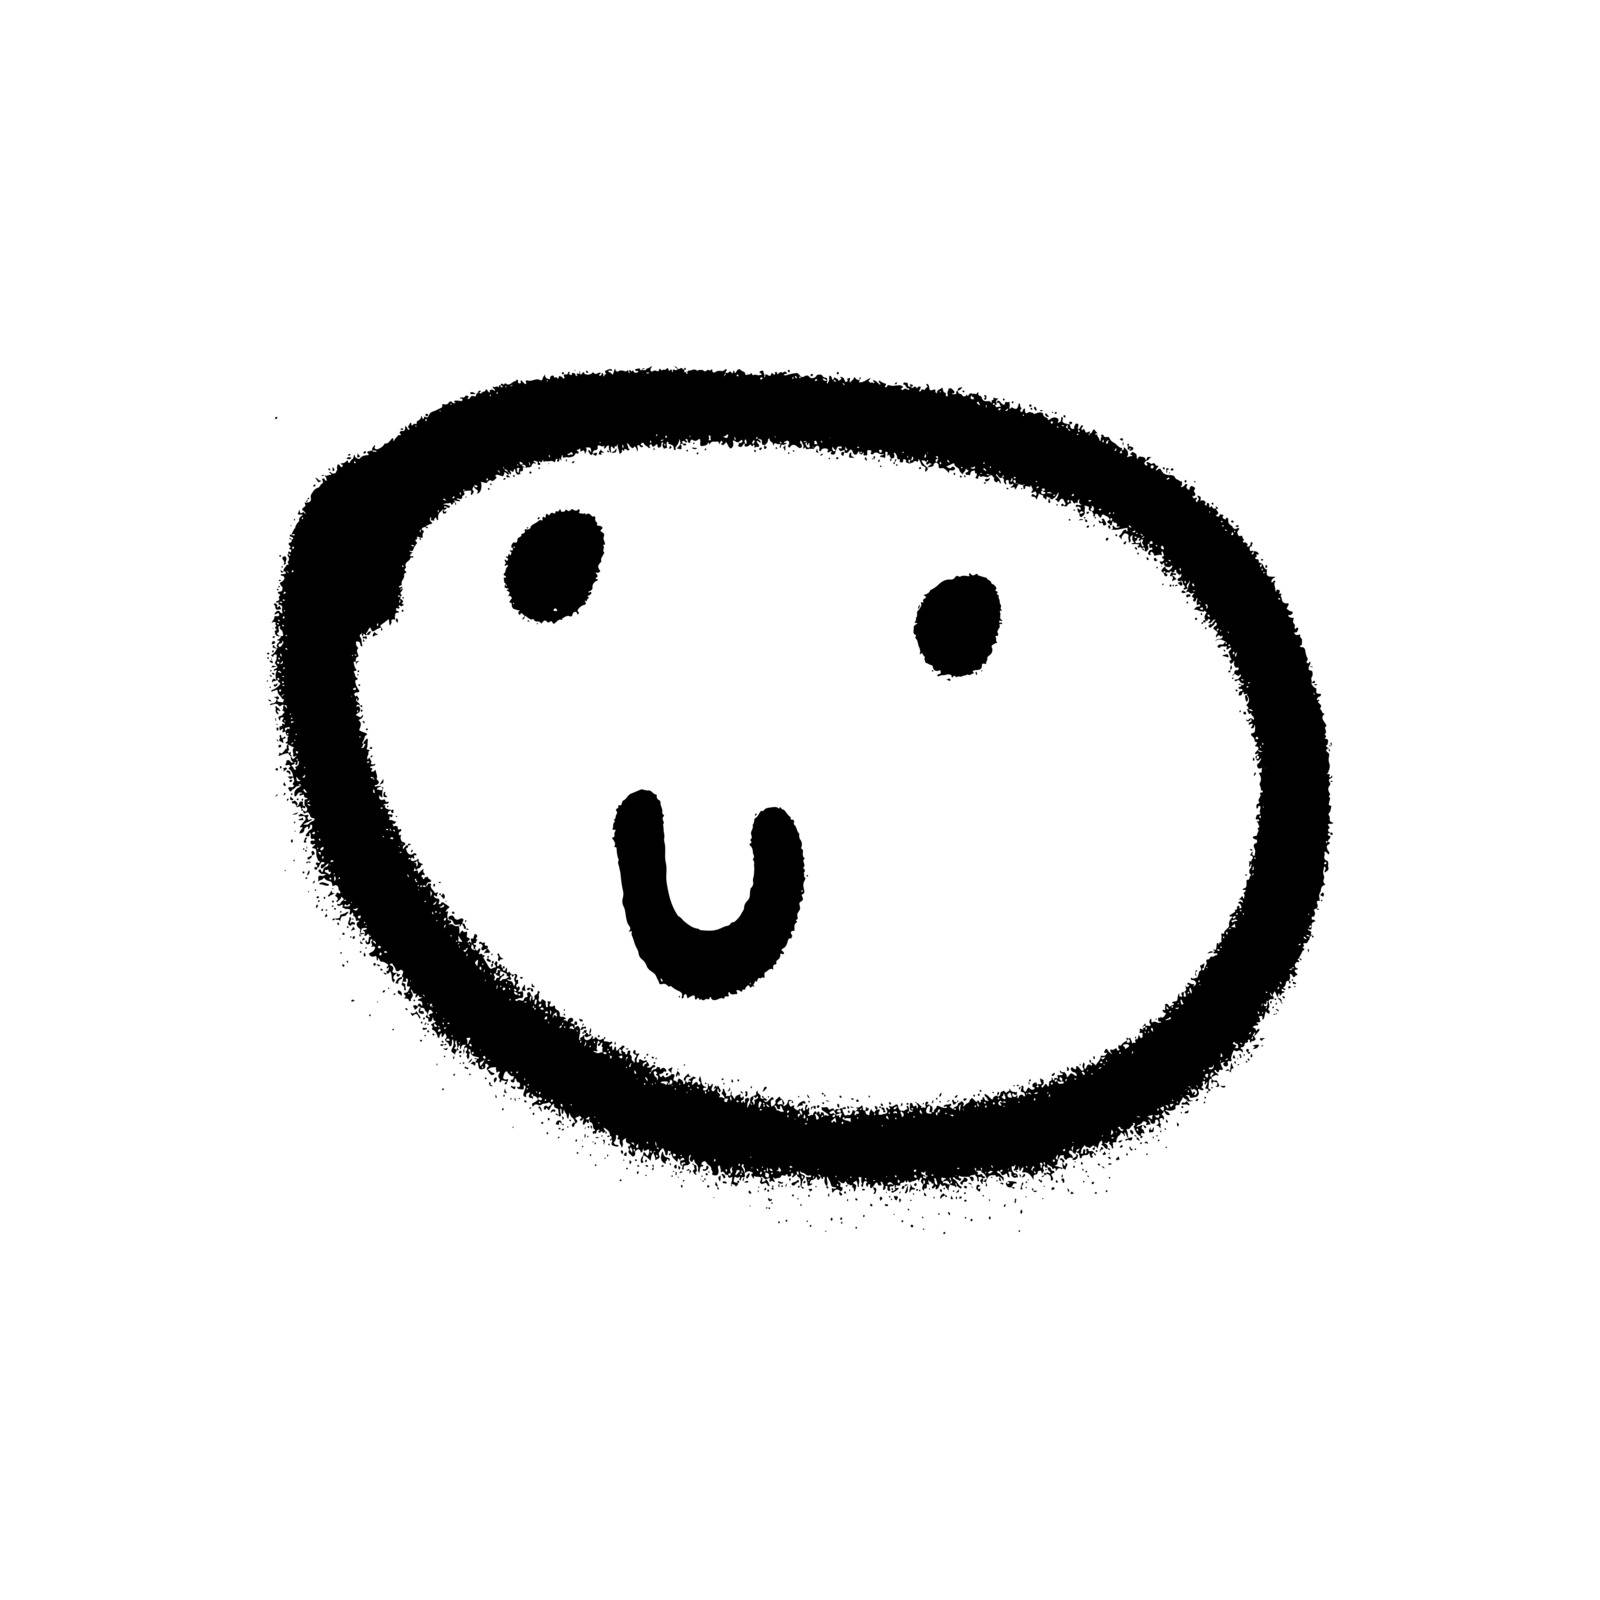 Graffiti grunge emoji with black ond white color